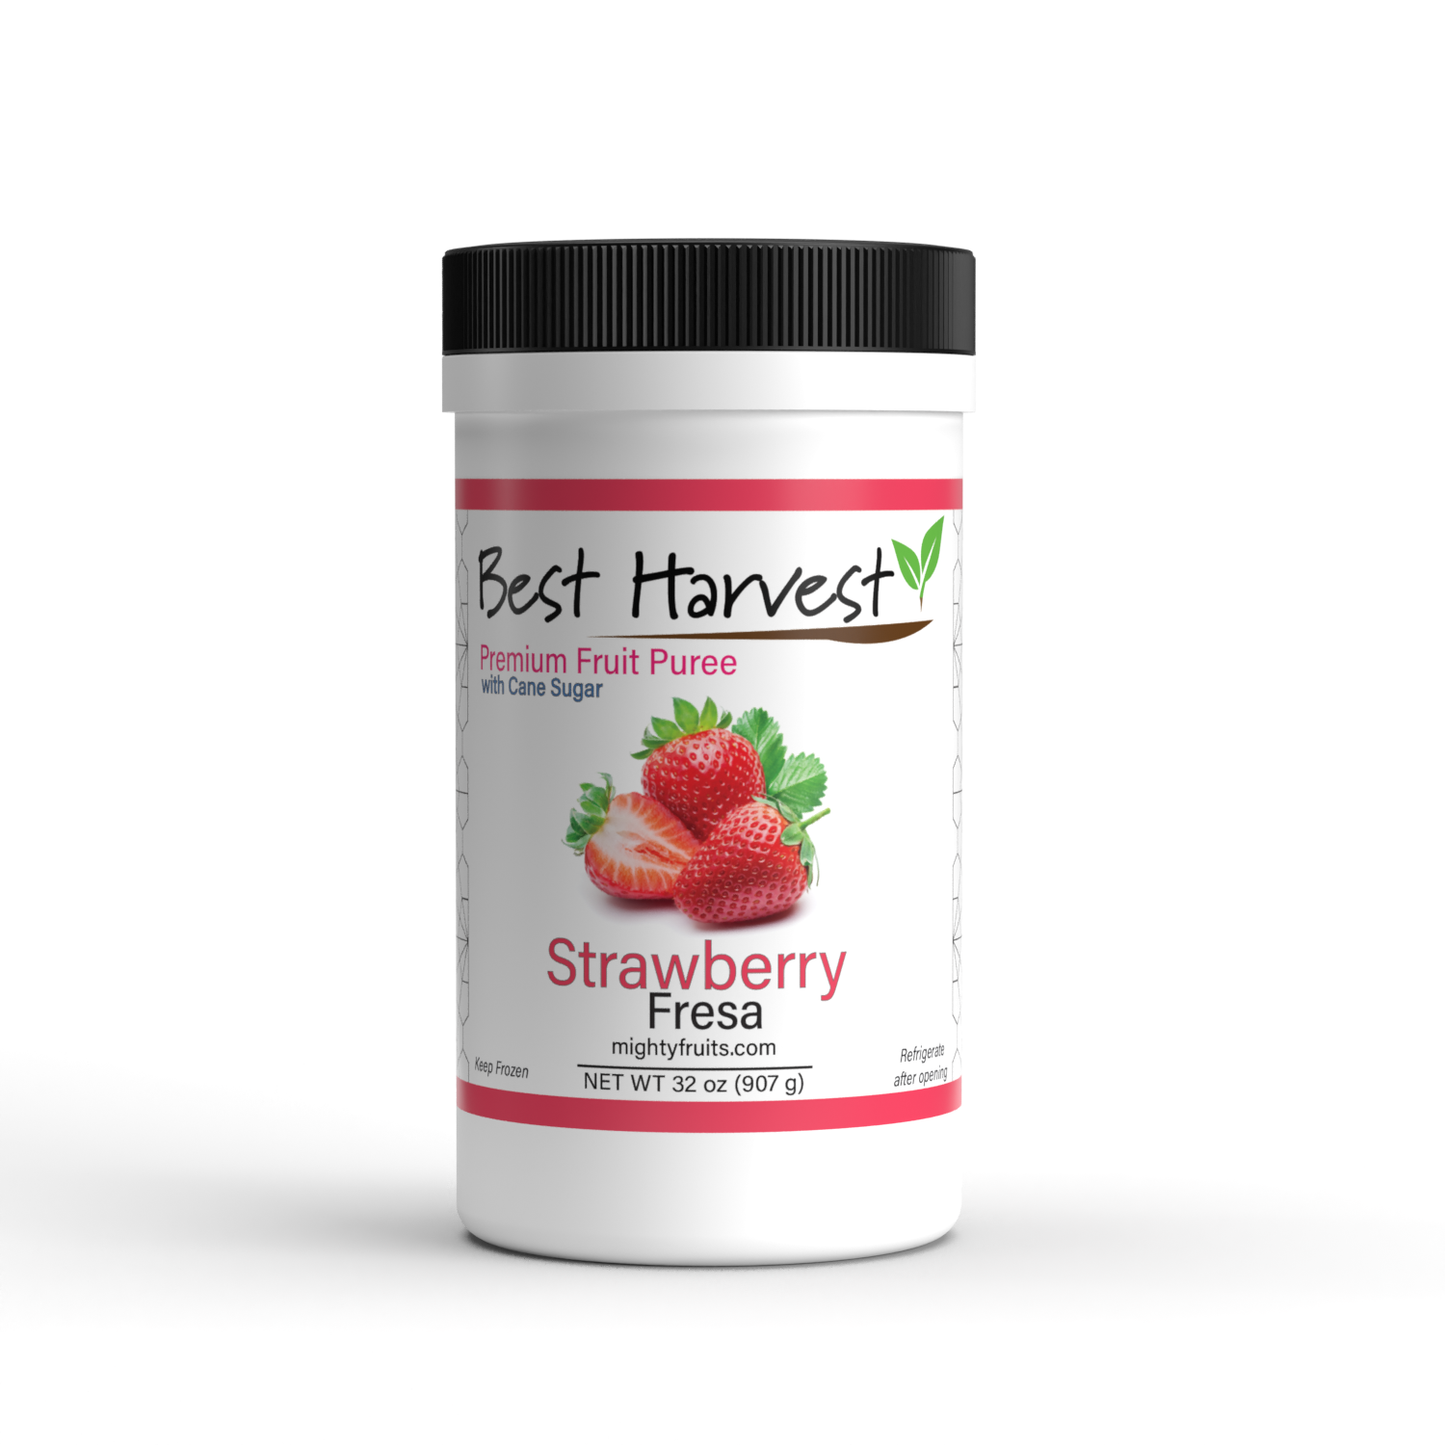 STRAWBERRY - BEST HARVEST - Premium Fruit Puree